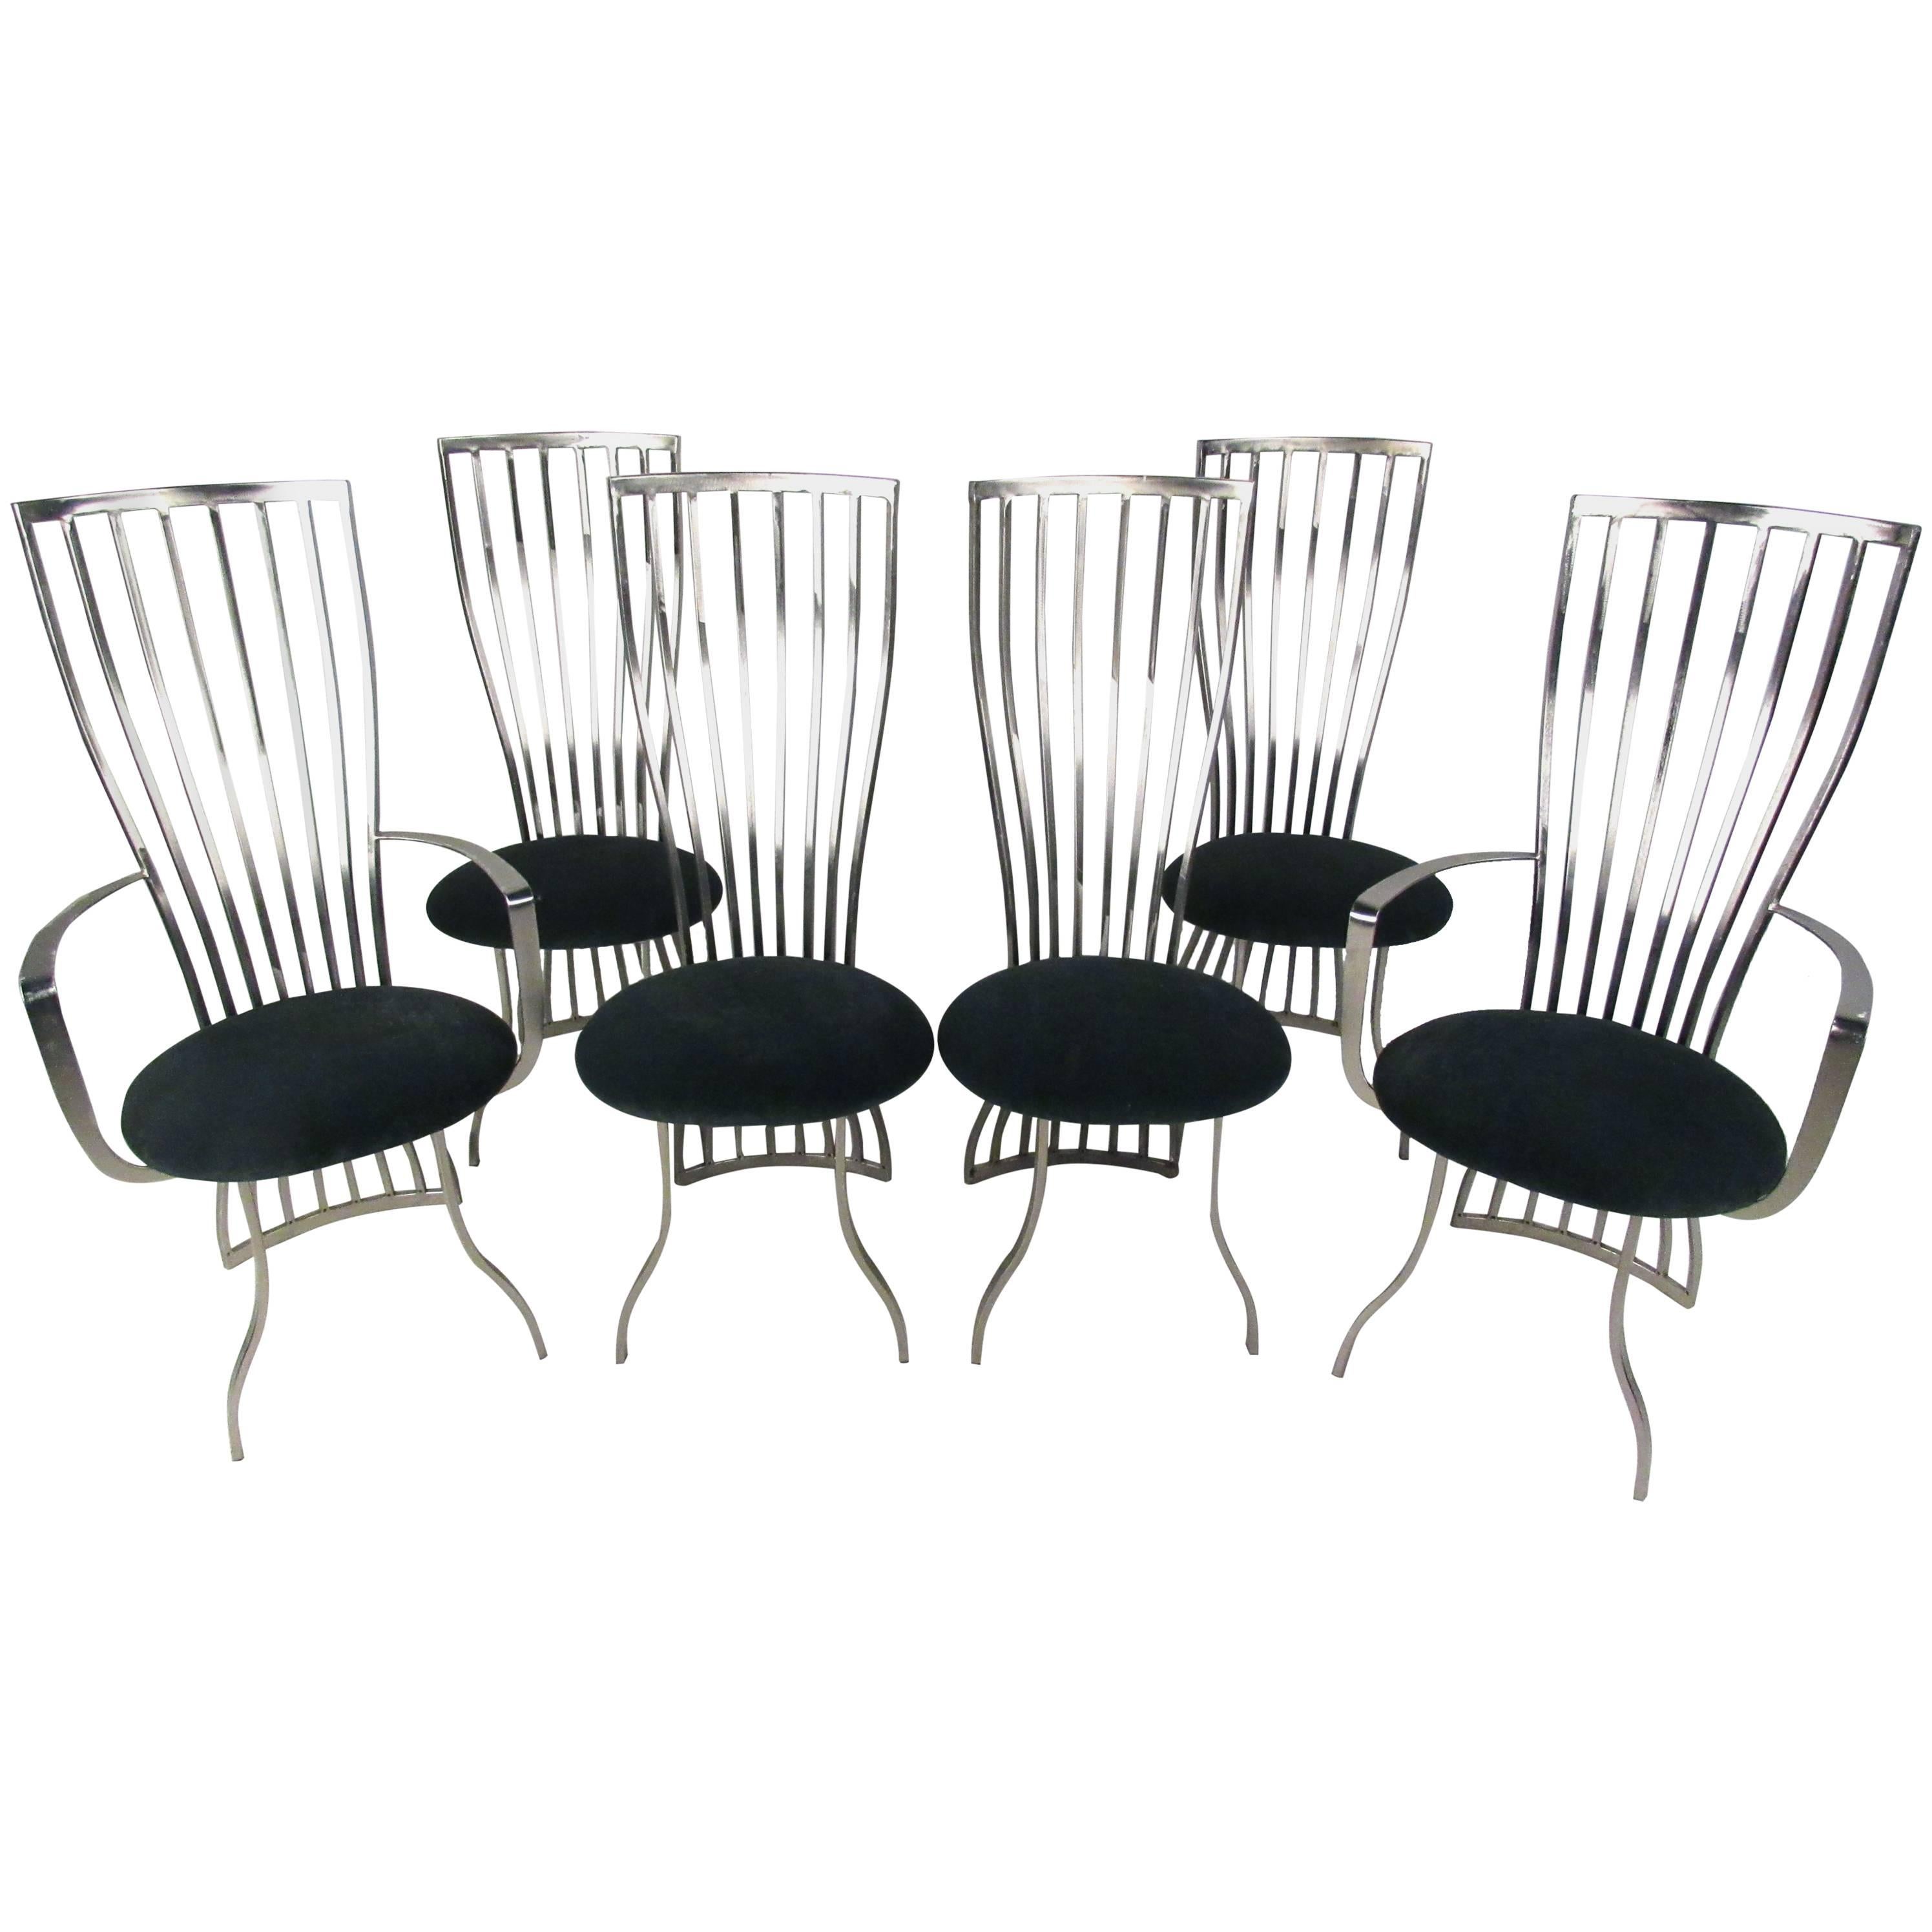 Stunning Modern Set of Sculptural Steel Dining Chairs